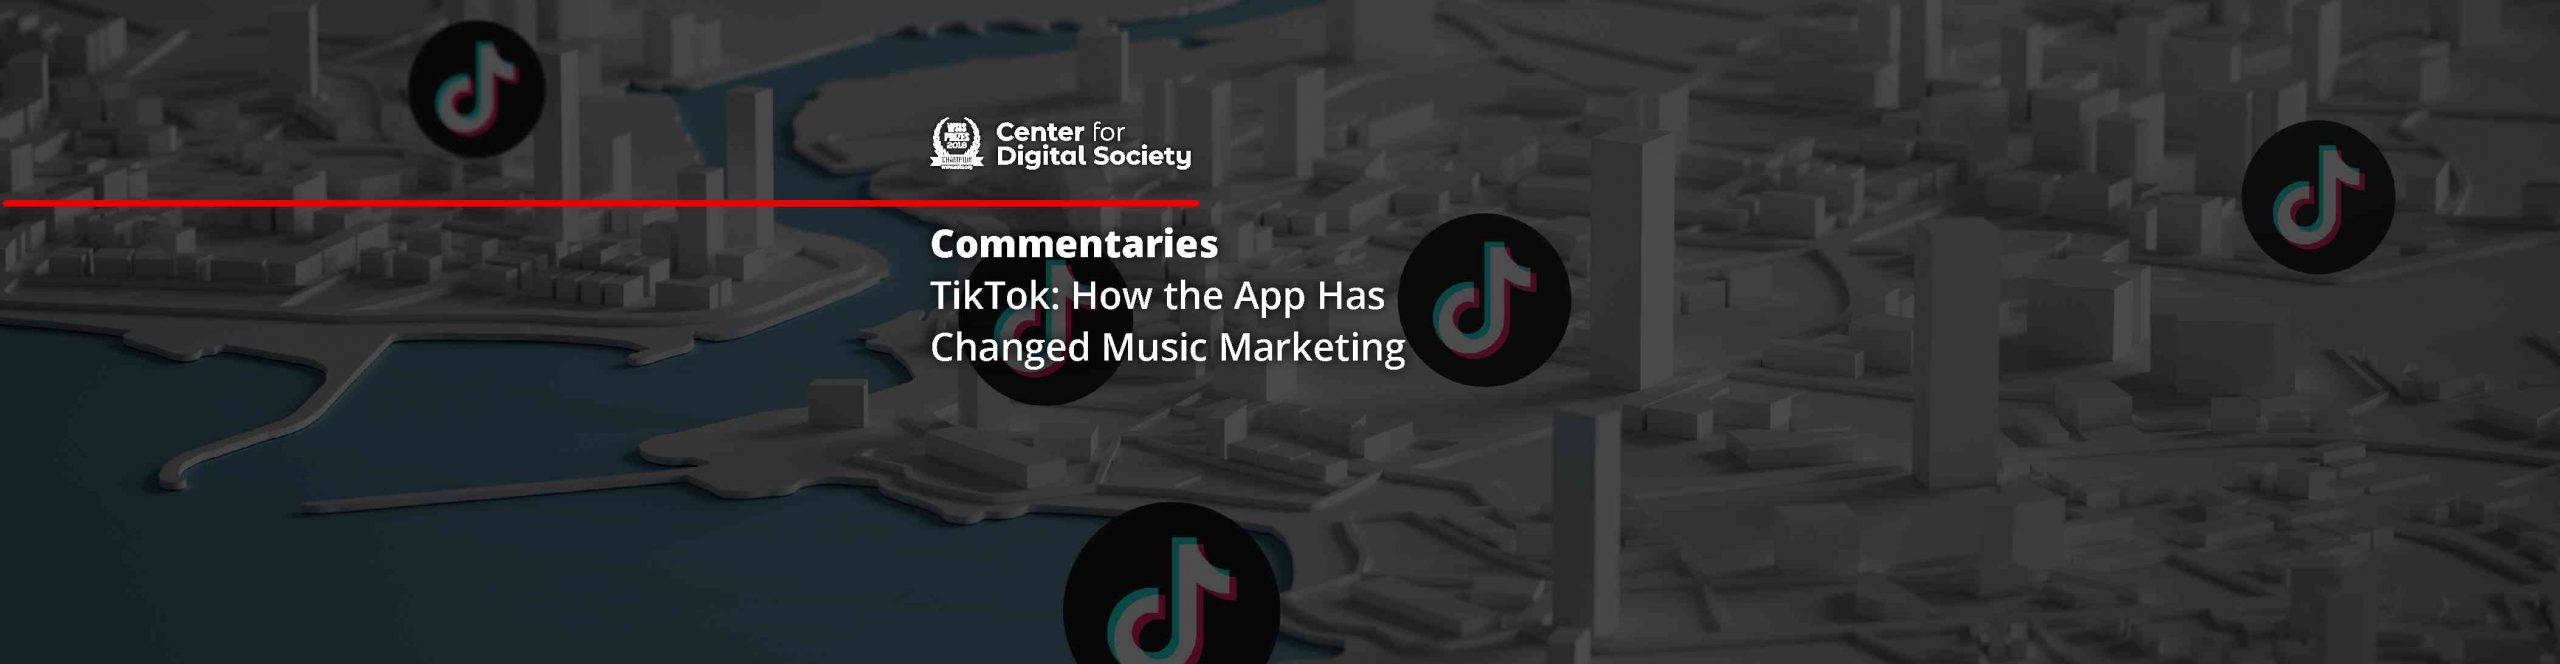 TikTok: How the App Has Changed Music Marketing